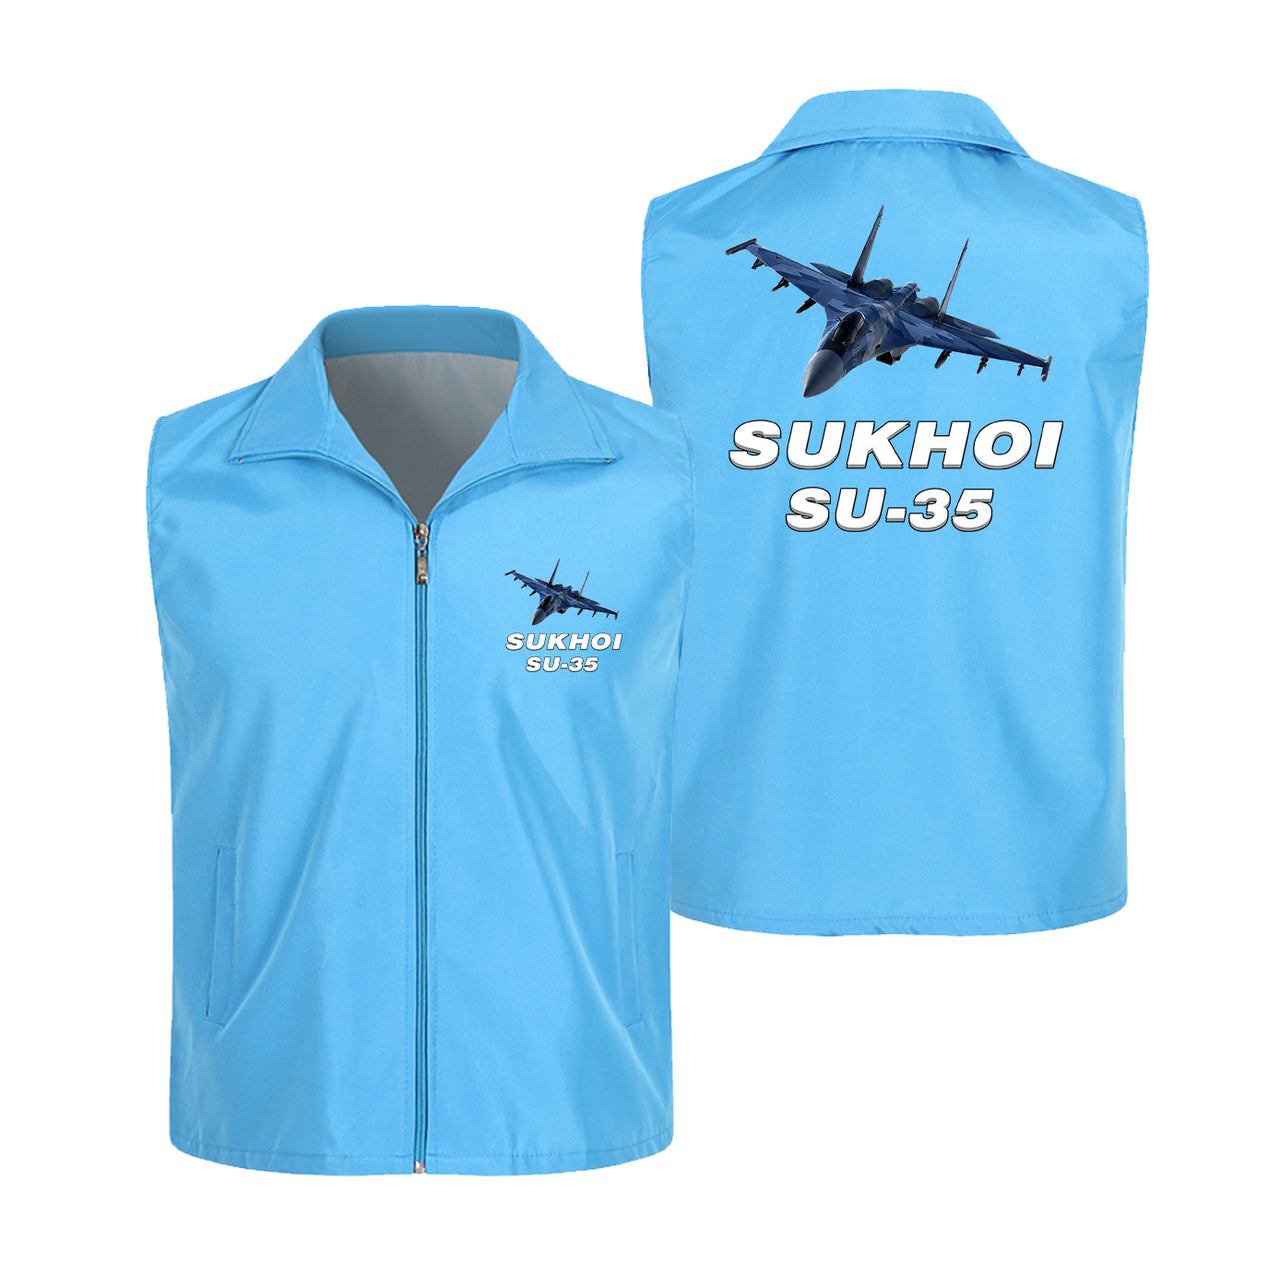 The Sukhoi SU-35 Designed Thin Style Vests